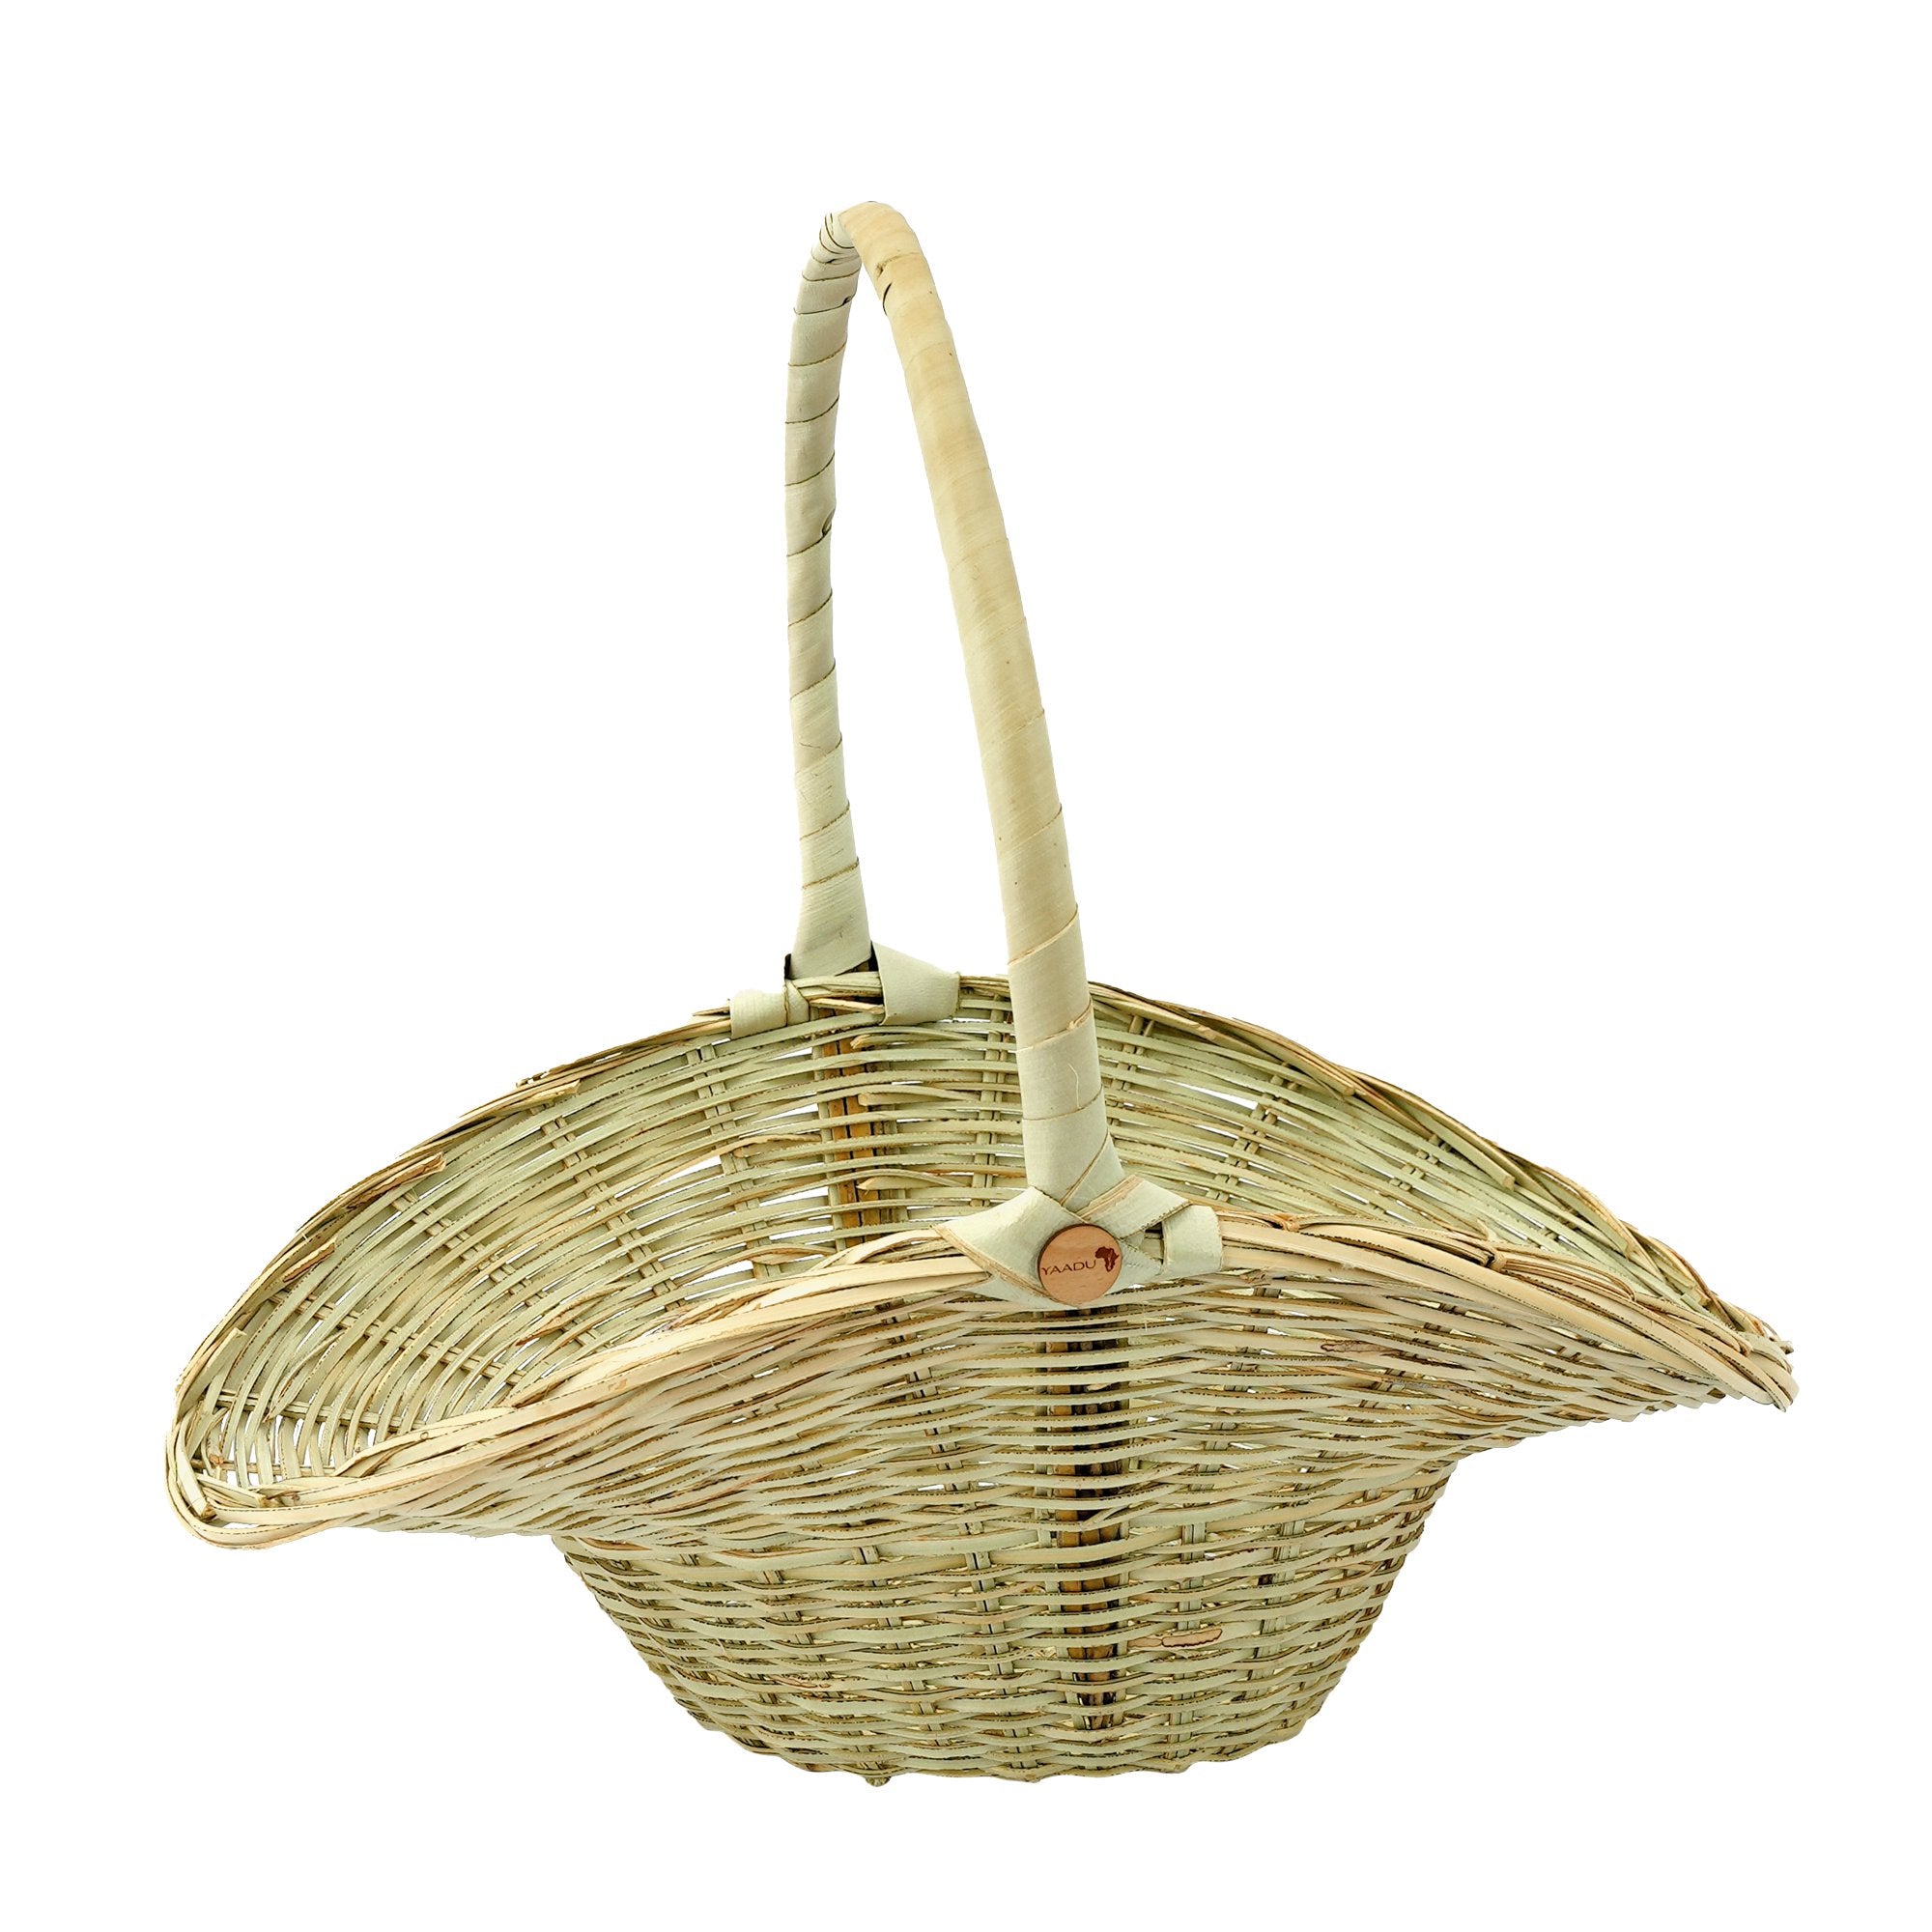 Oval shopping basket with handle – Sadio woven basket